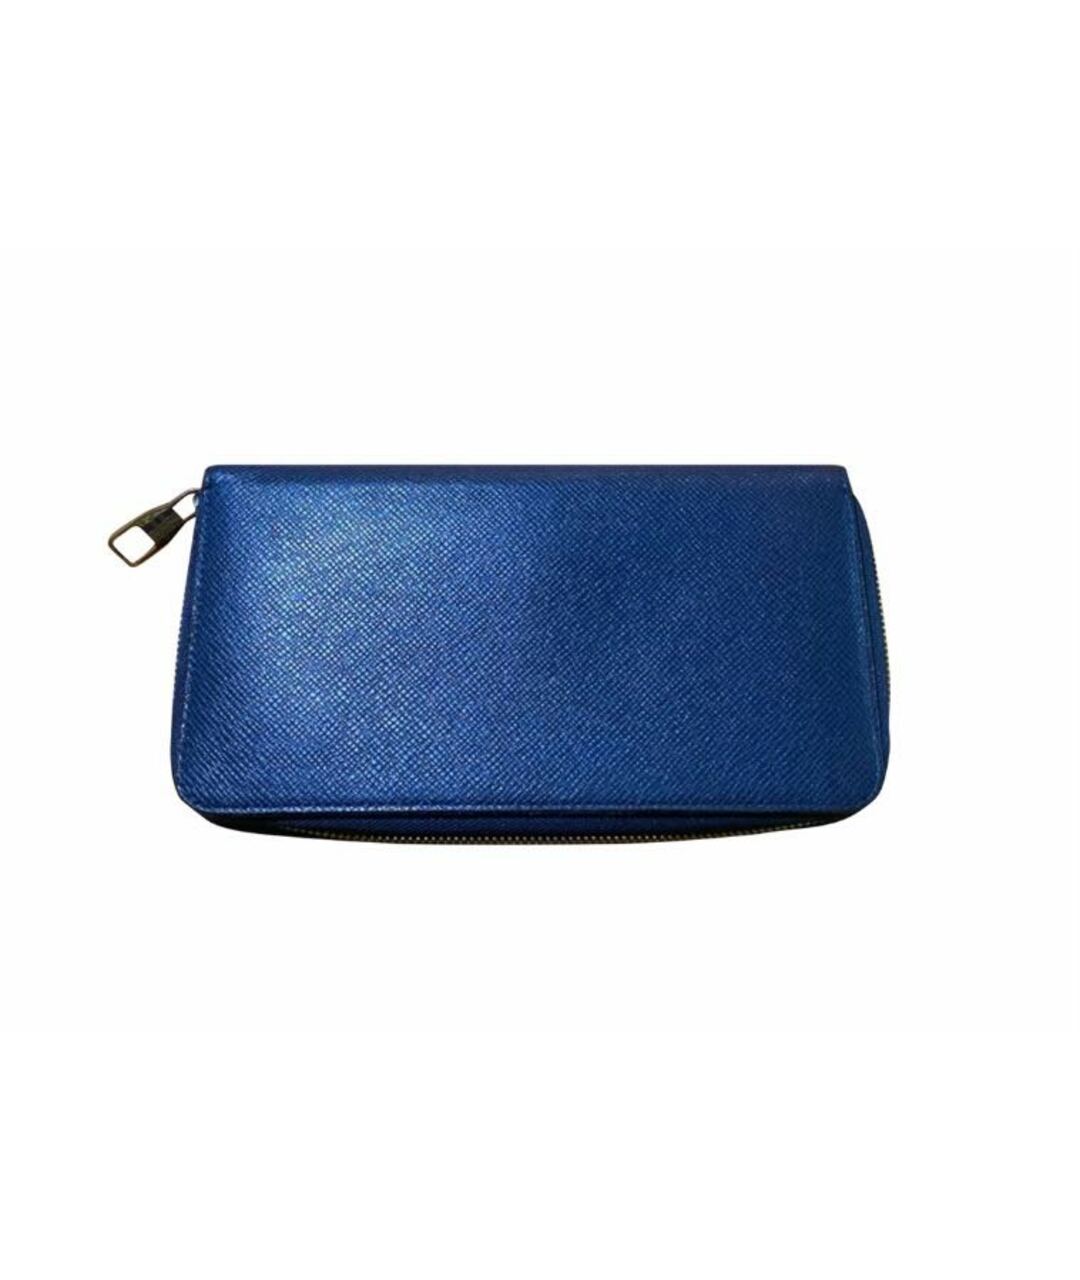 LOUIS VUITTON PRE-OWNED Синий кожаный кошелек, фото 1